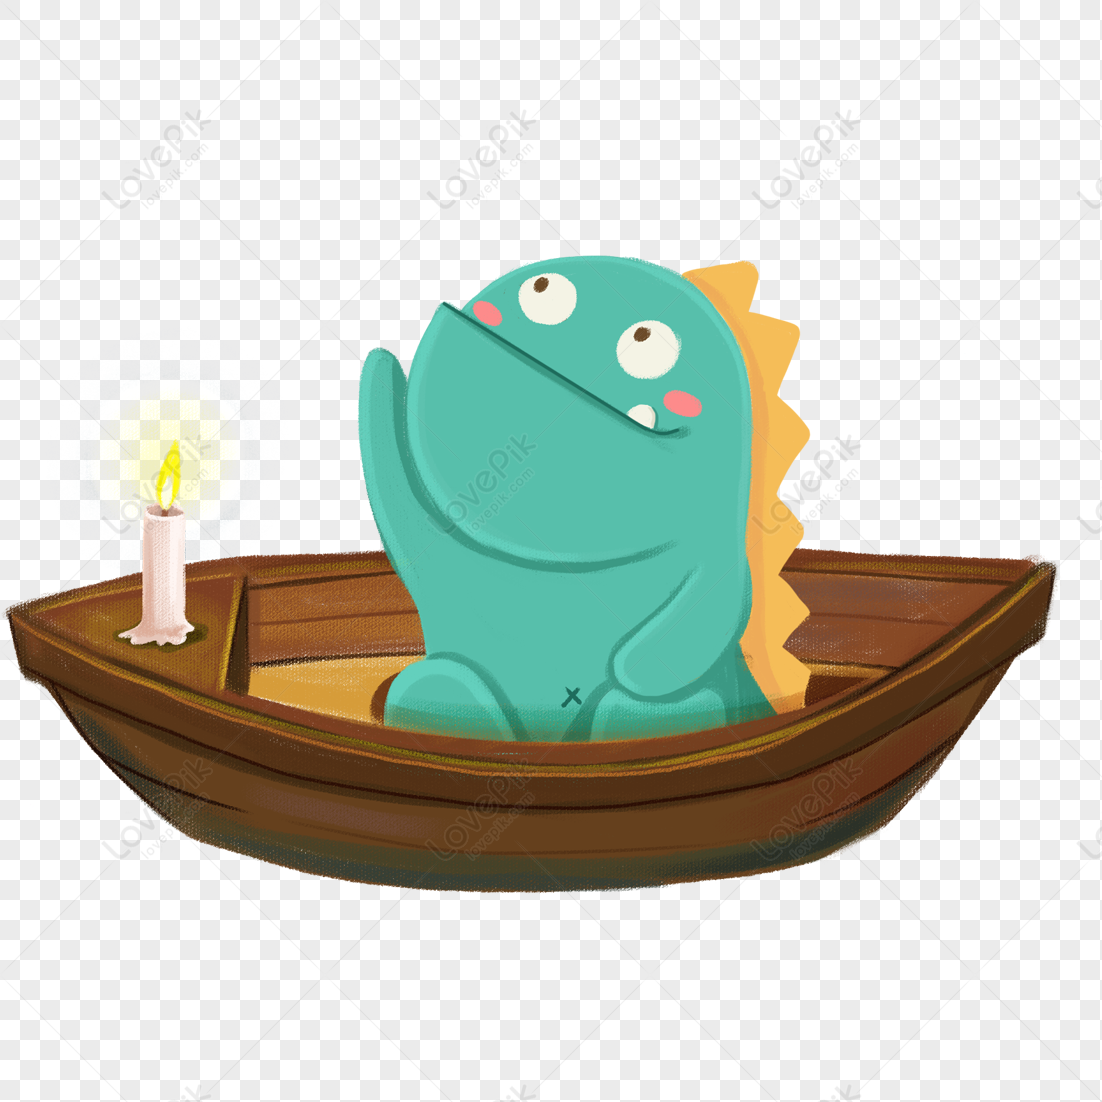 https://img.lovepik.com/free-png/20211106/lovepik-lizard-wooden-boat-png-image_400410866_wh1200.png